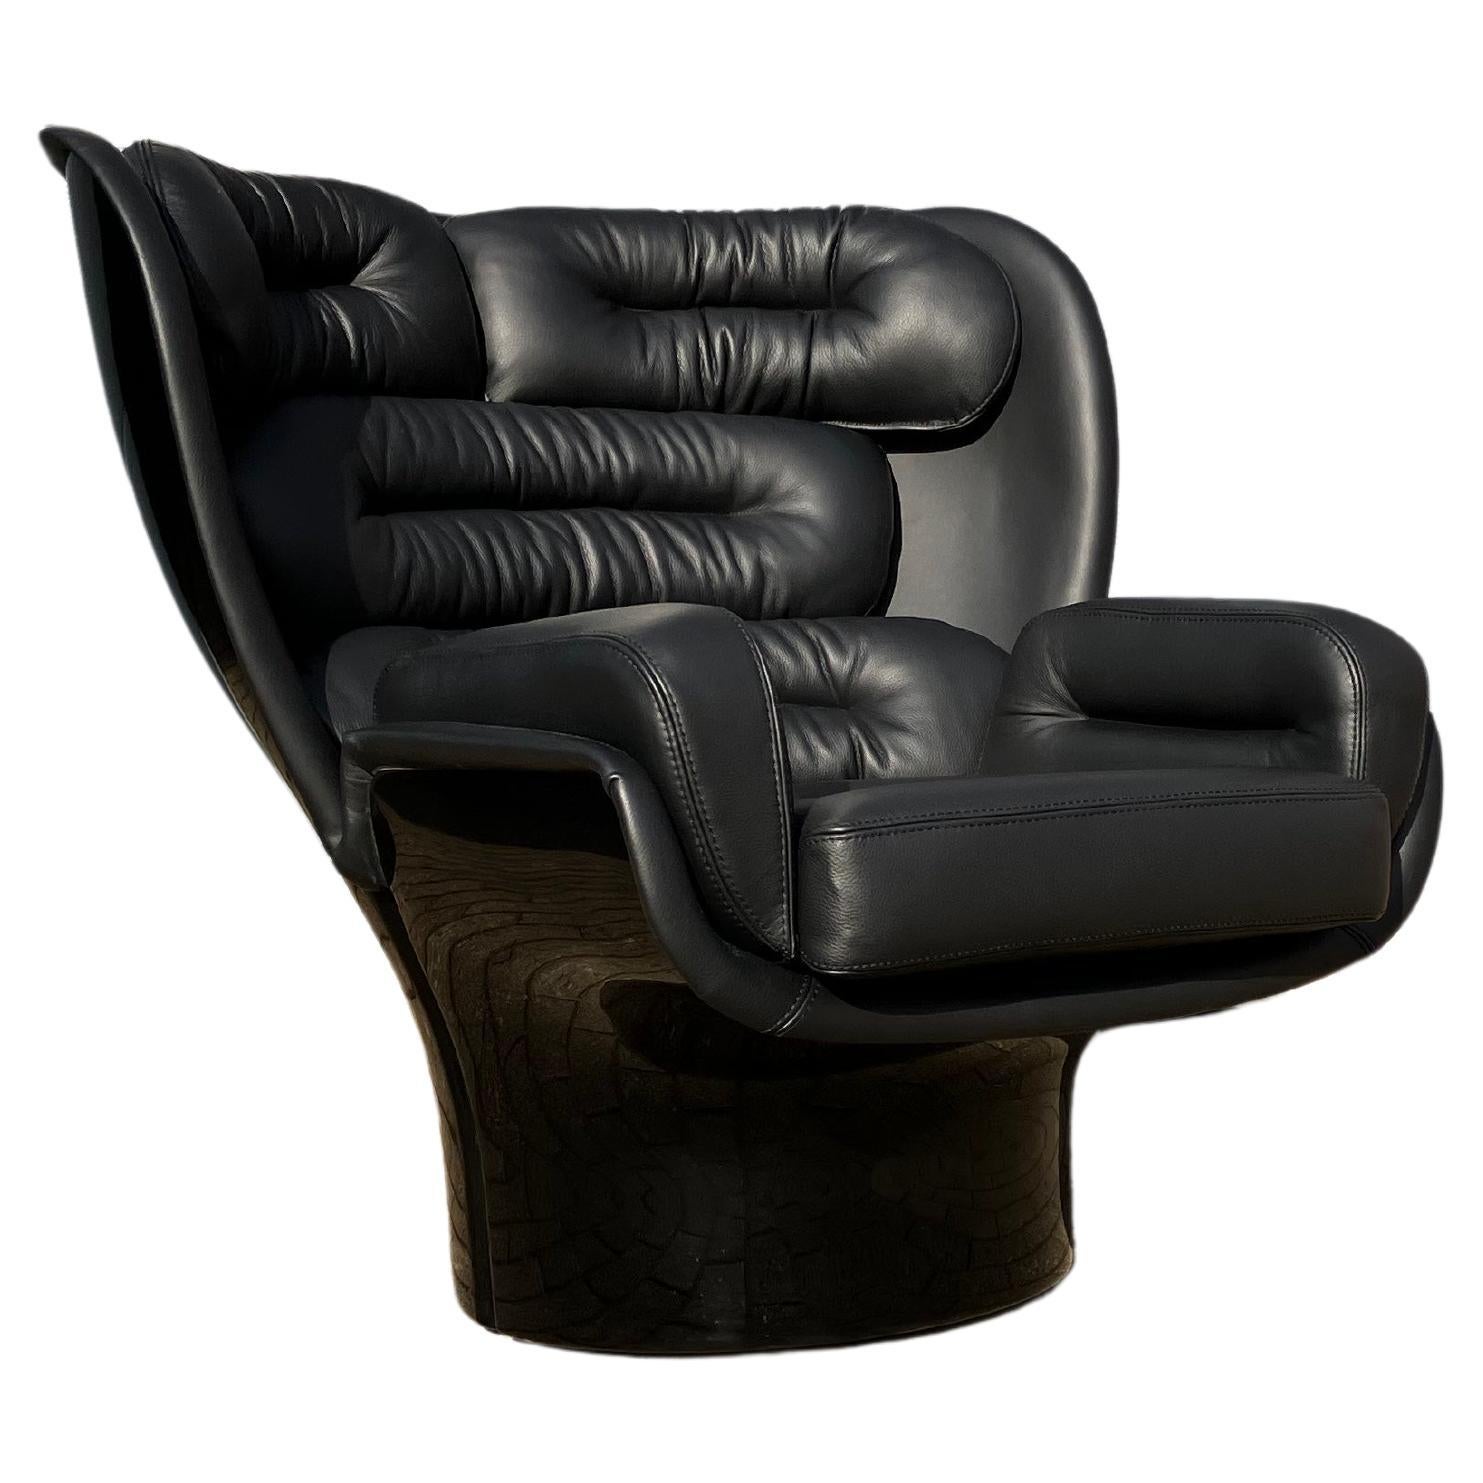 Black on Black Joe Colombo Elda Chair For Sale